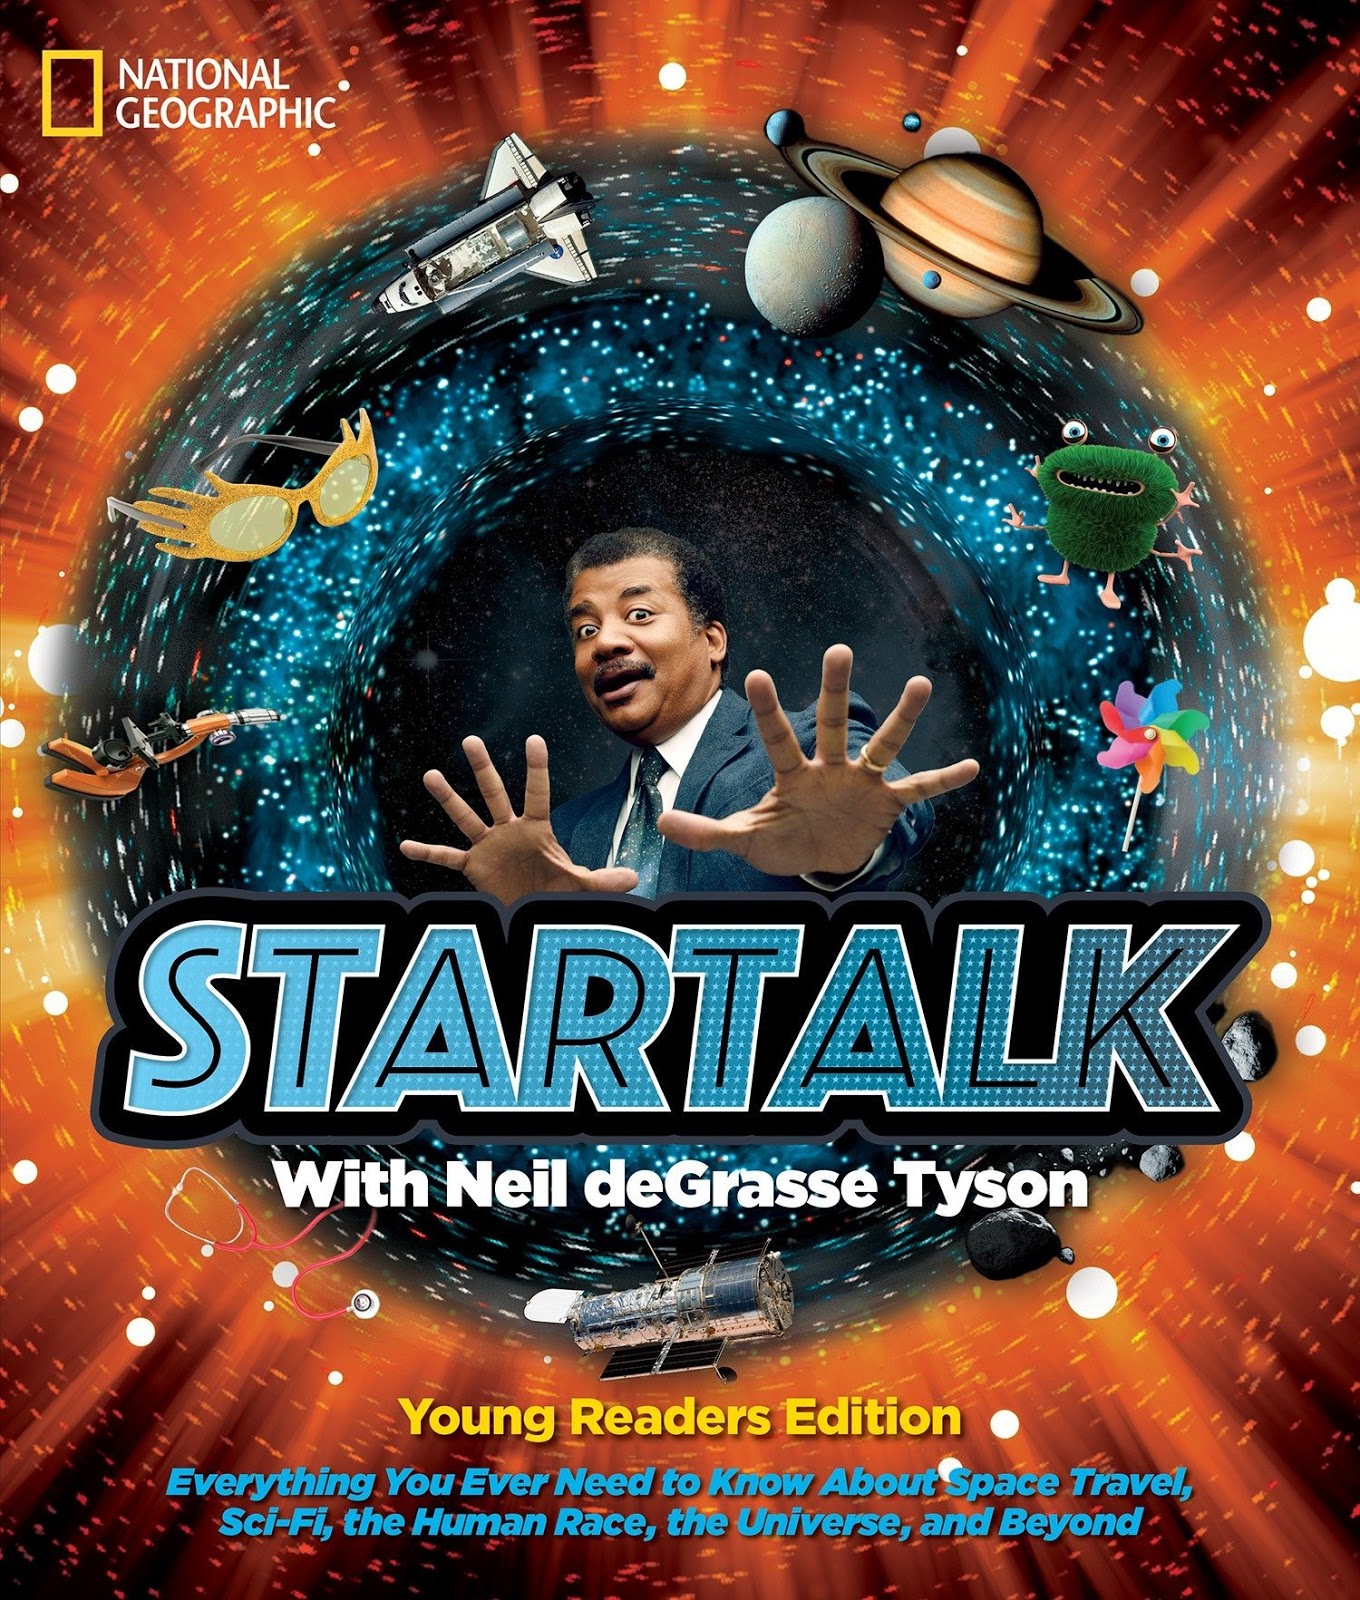 Link to the StarTalk book by Neil deGrasse Tyson.